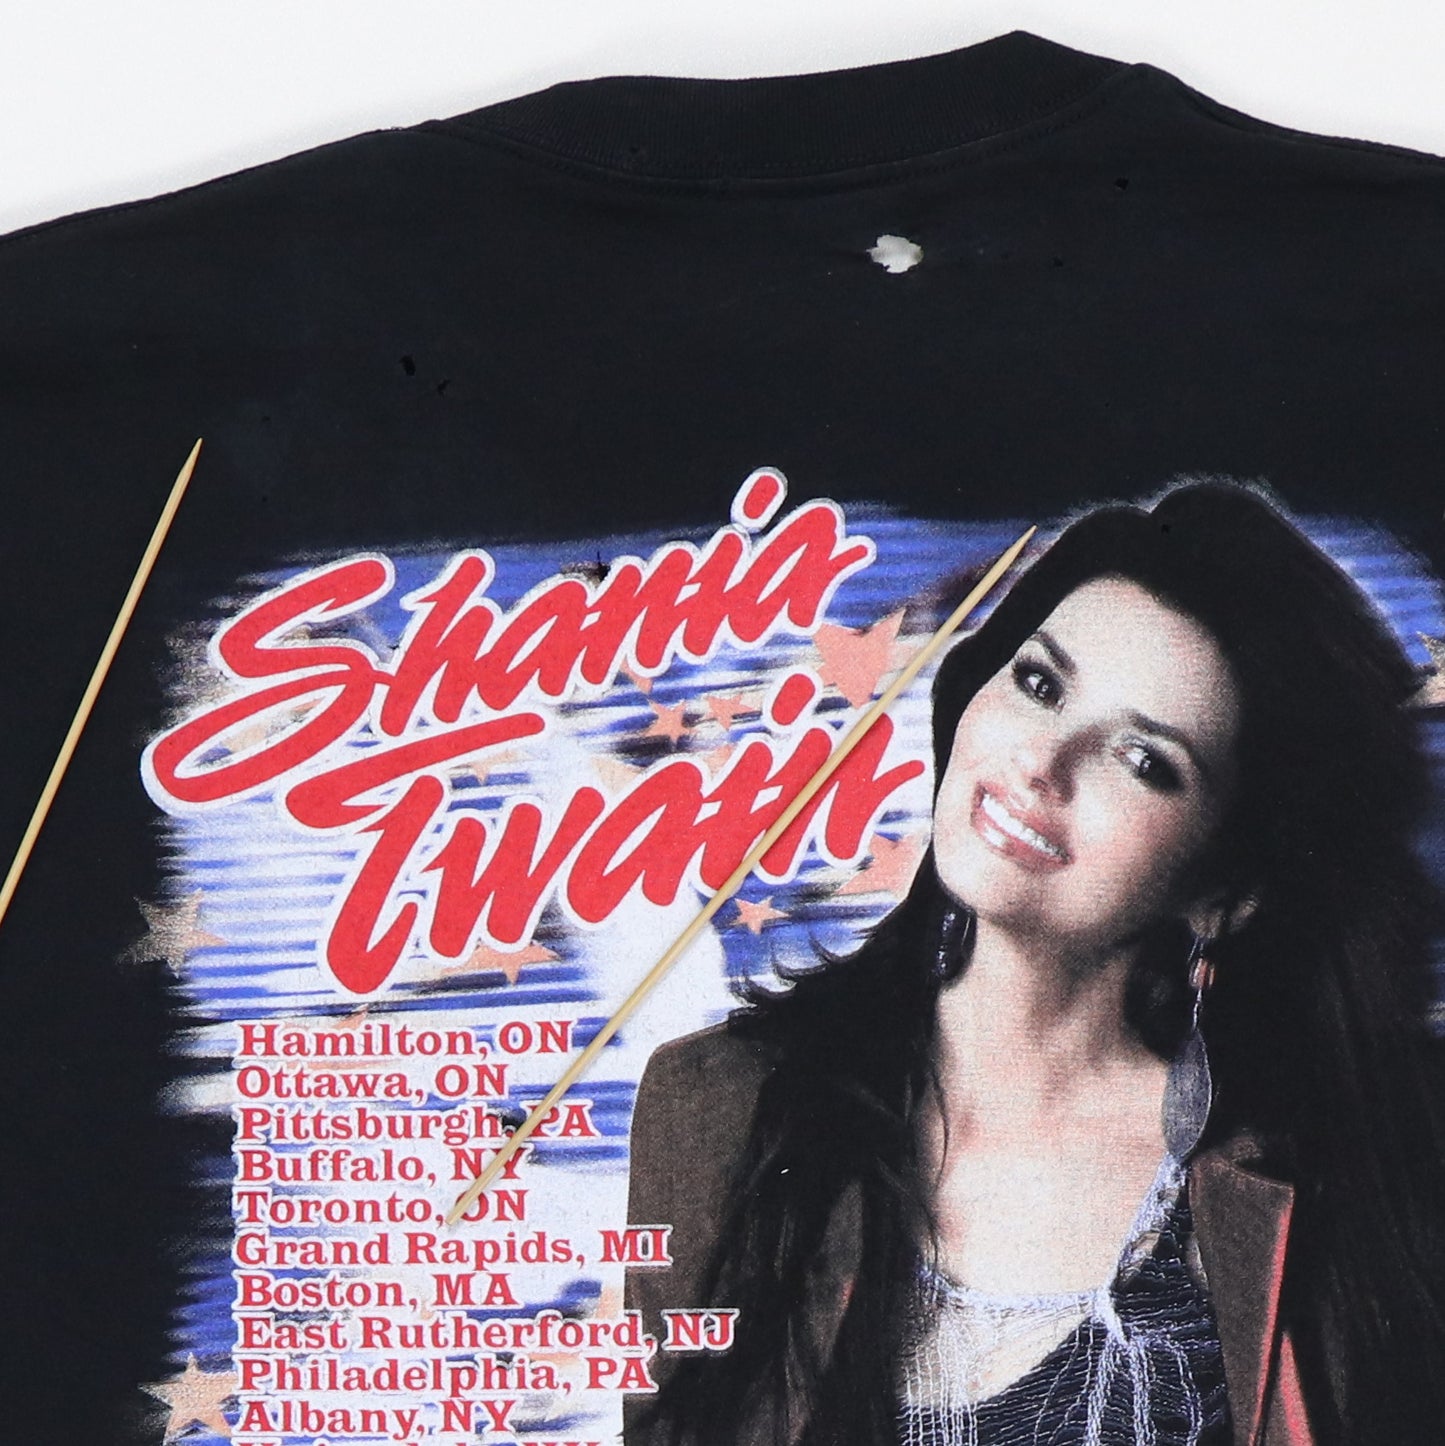 2003 Shania Twain Tour Shirt